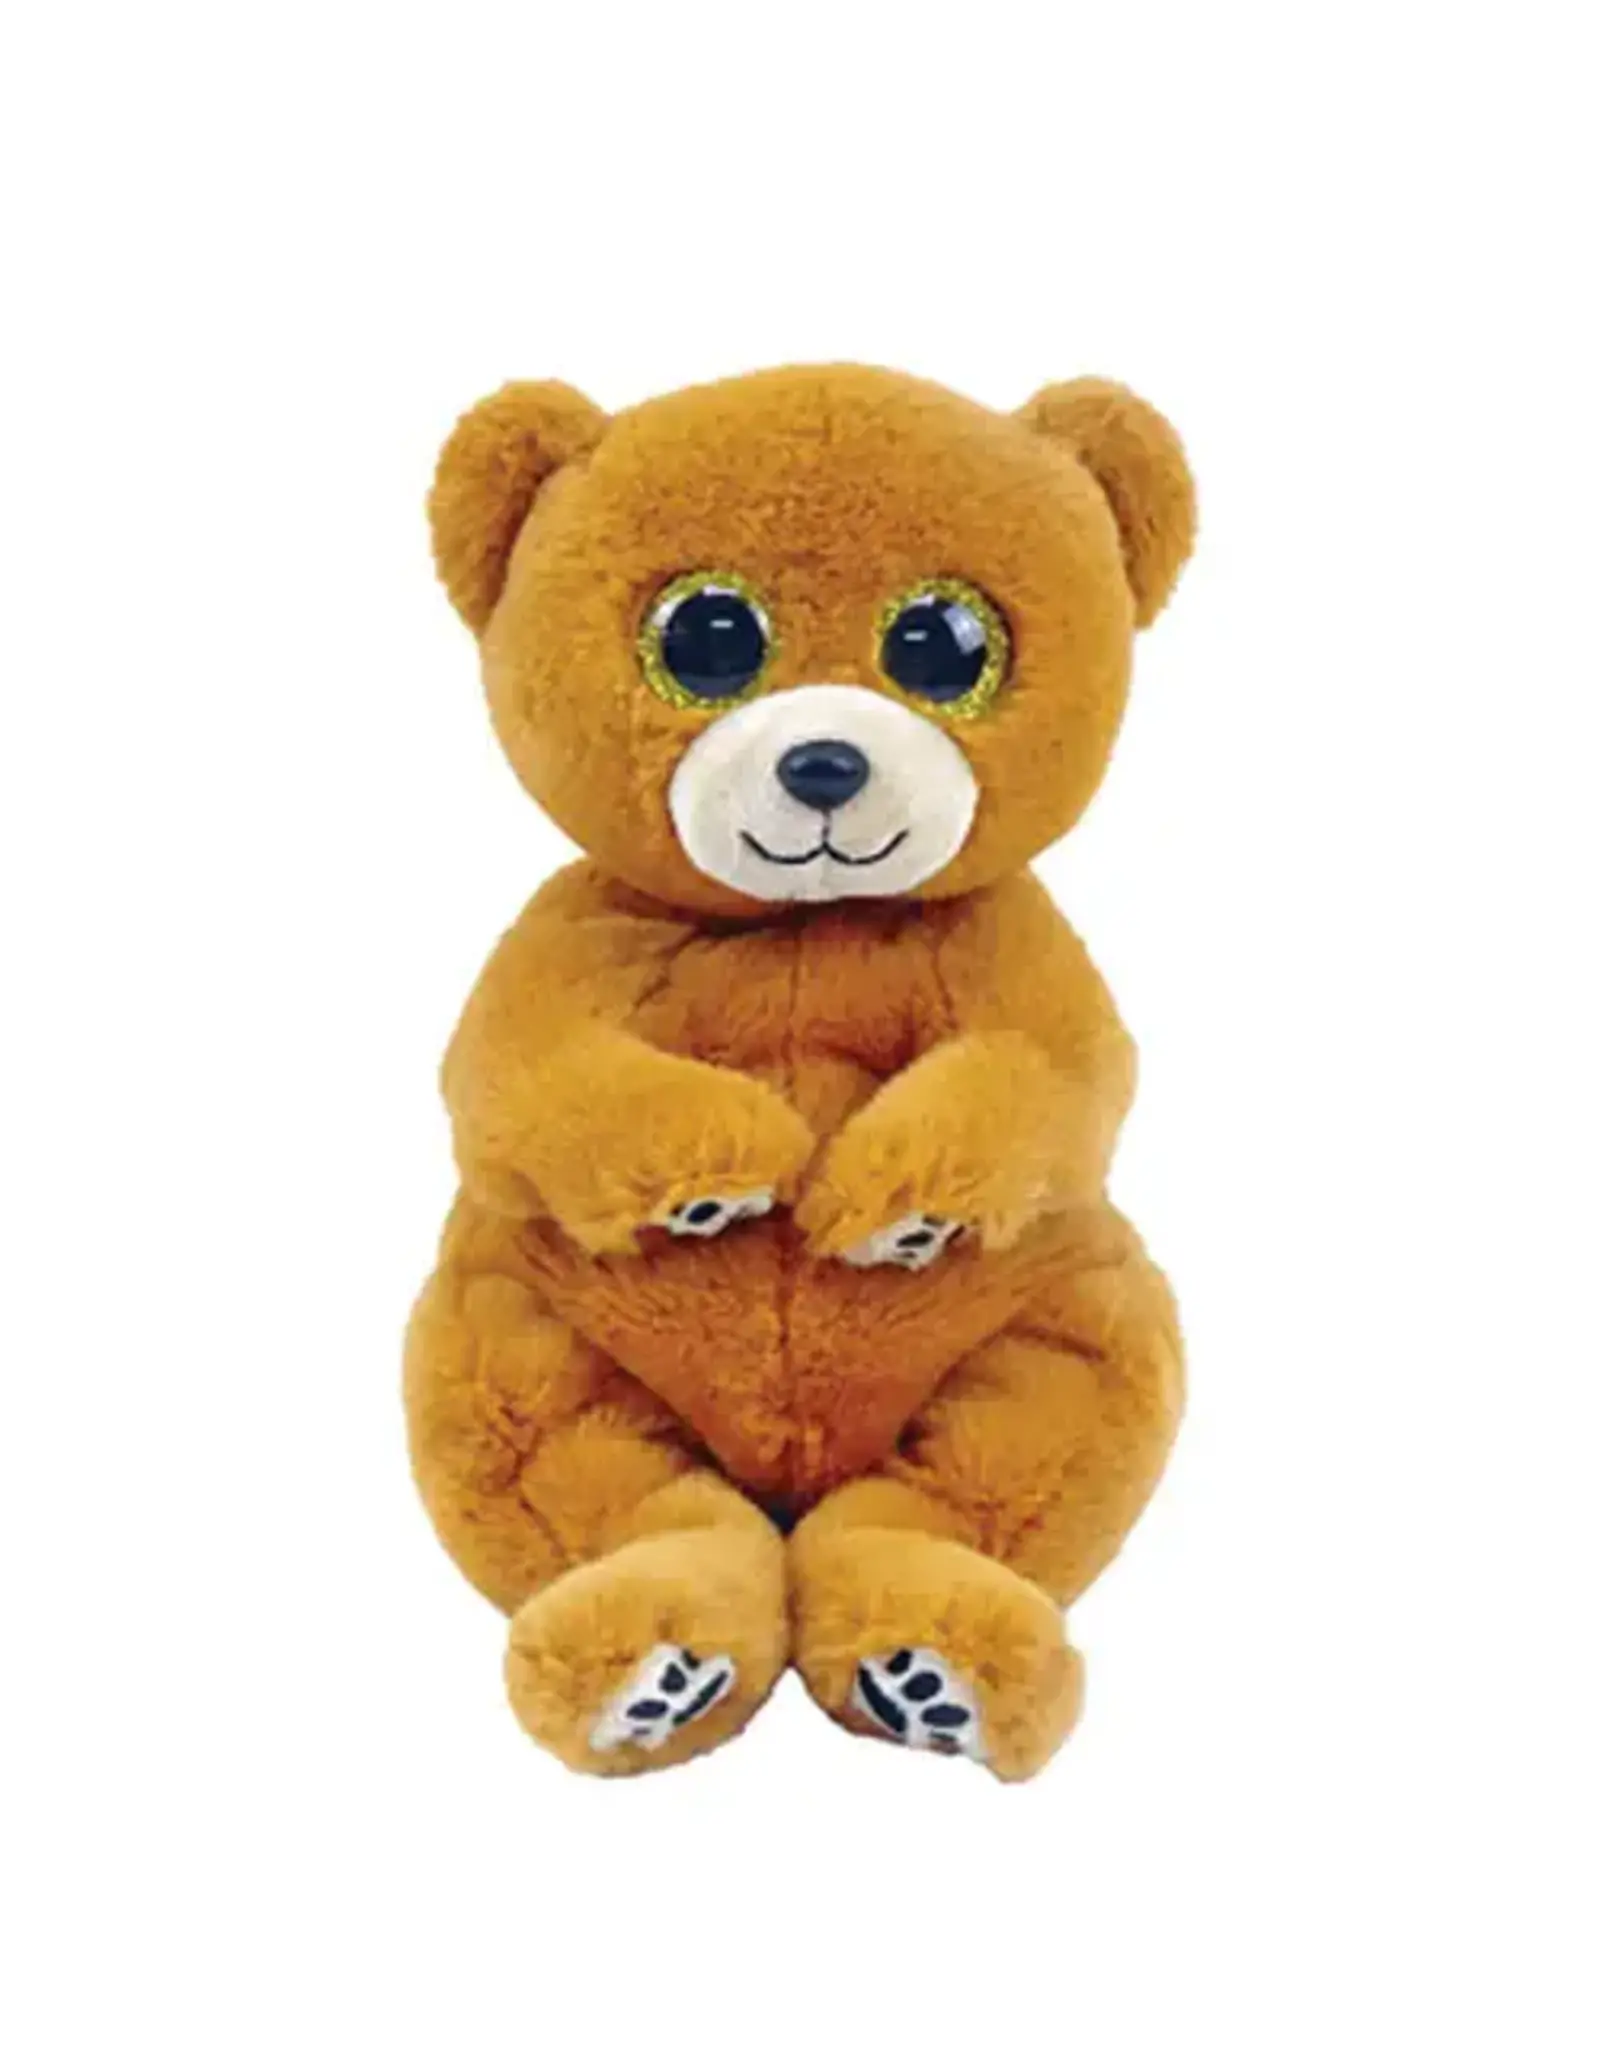 Ty Beanie Bellies - Duncan Brown Bear Reg